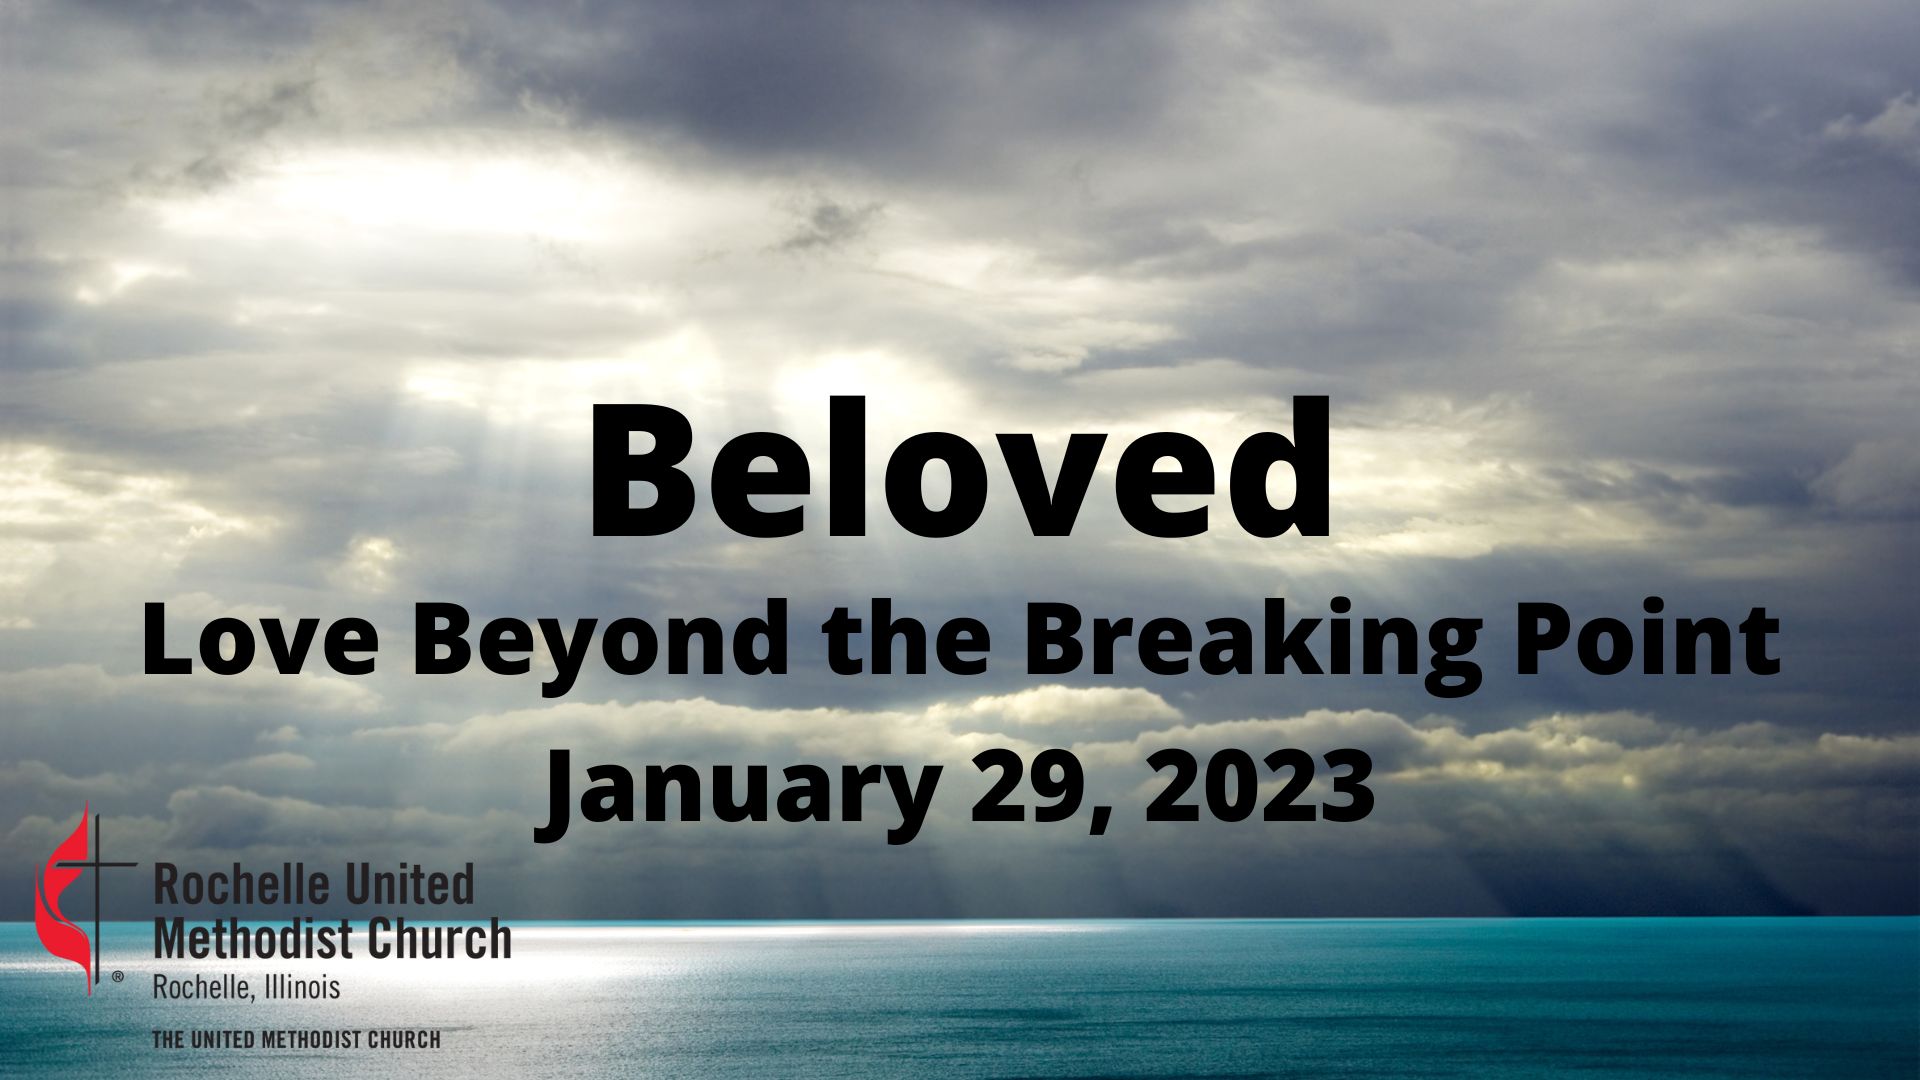 Beloved Love Beyond the Breaking Point